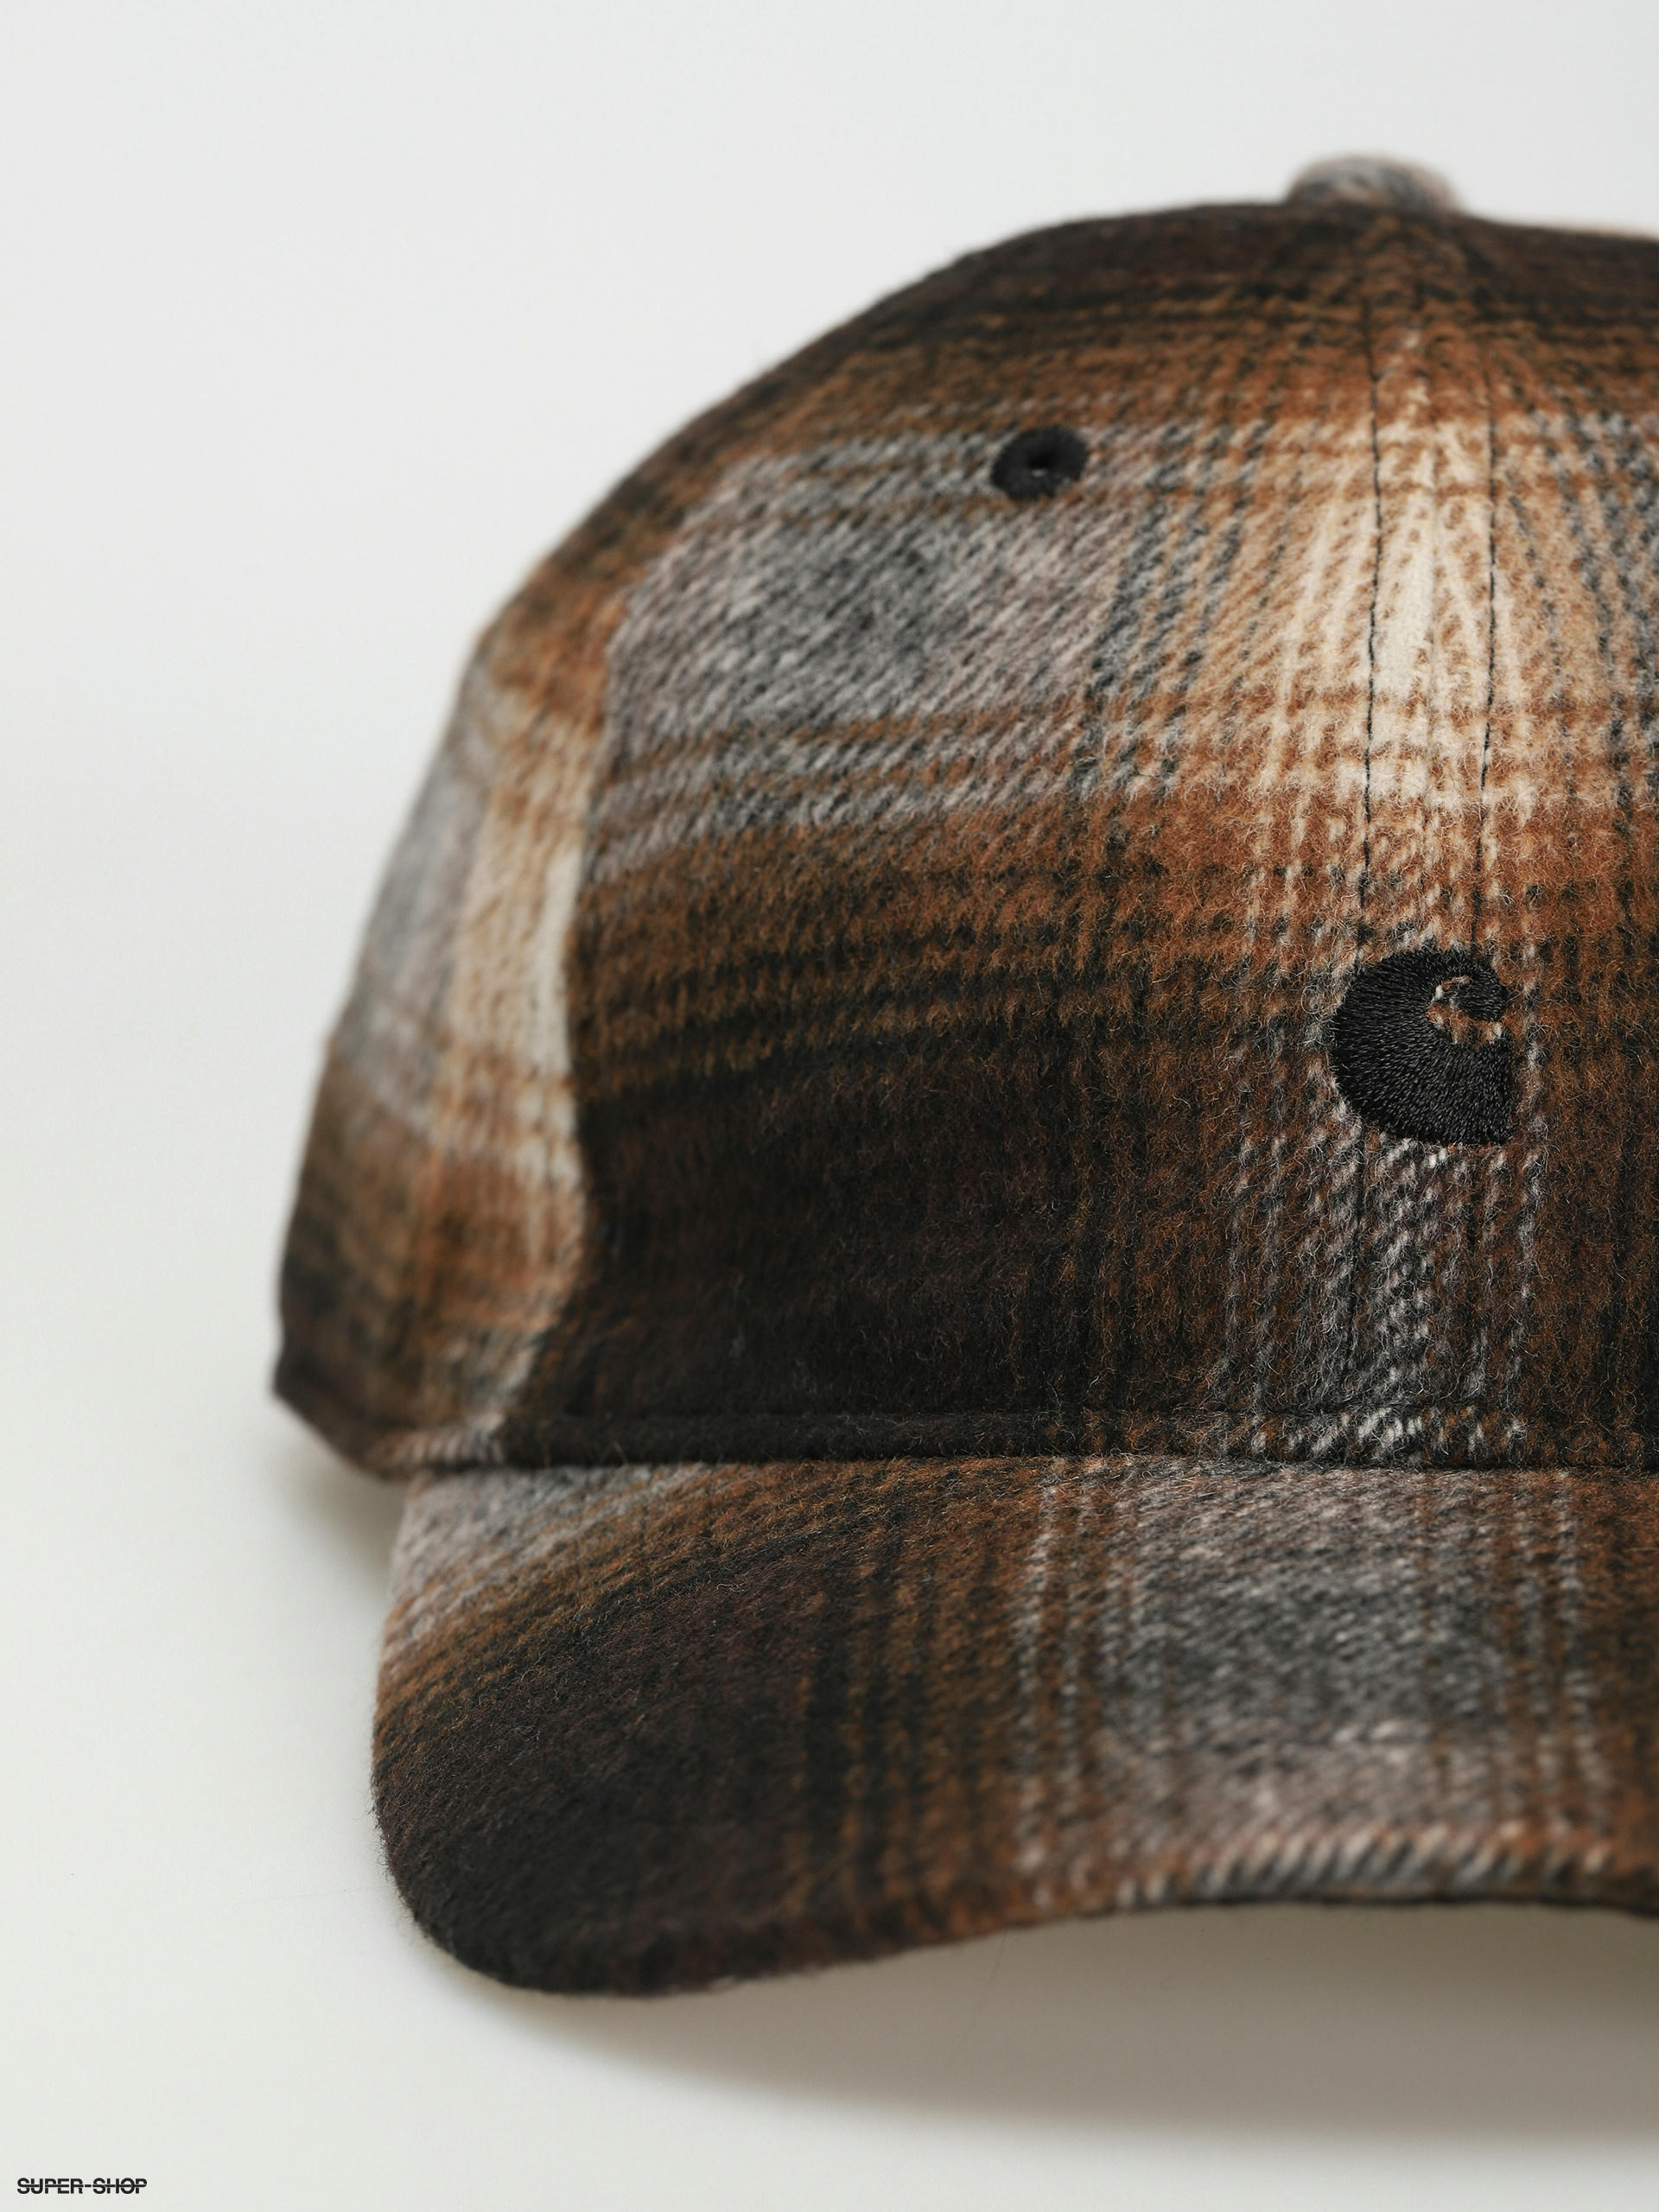 Carhartt Moreau Wool Baseball Hat in Brown for Men